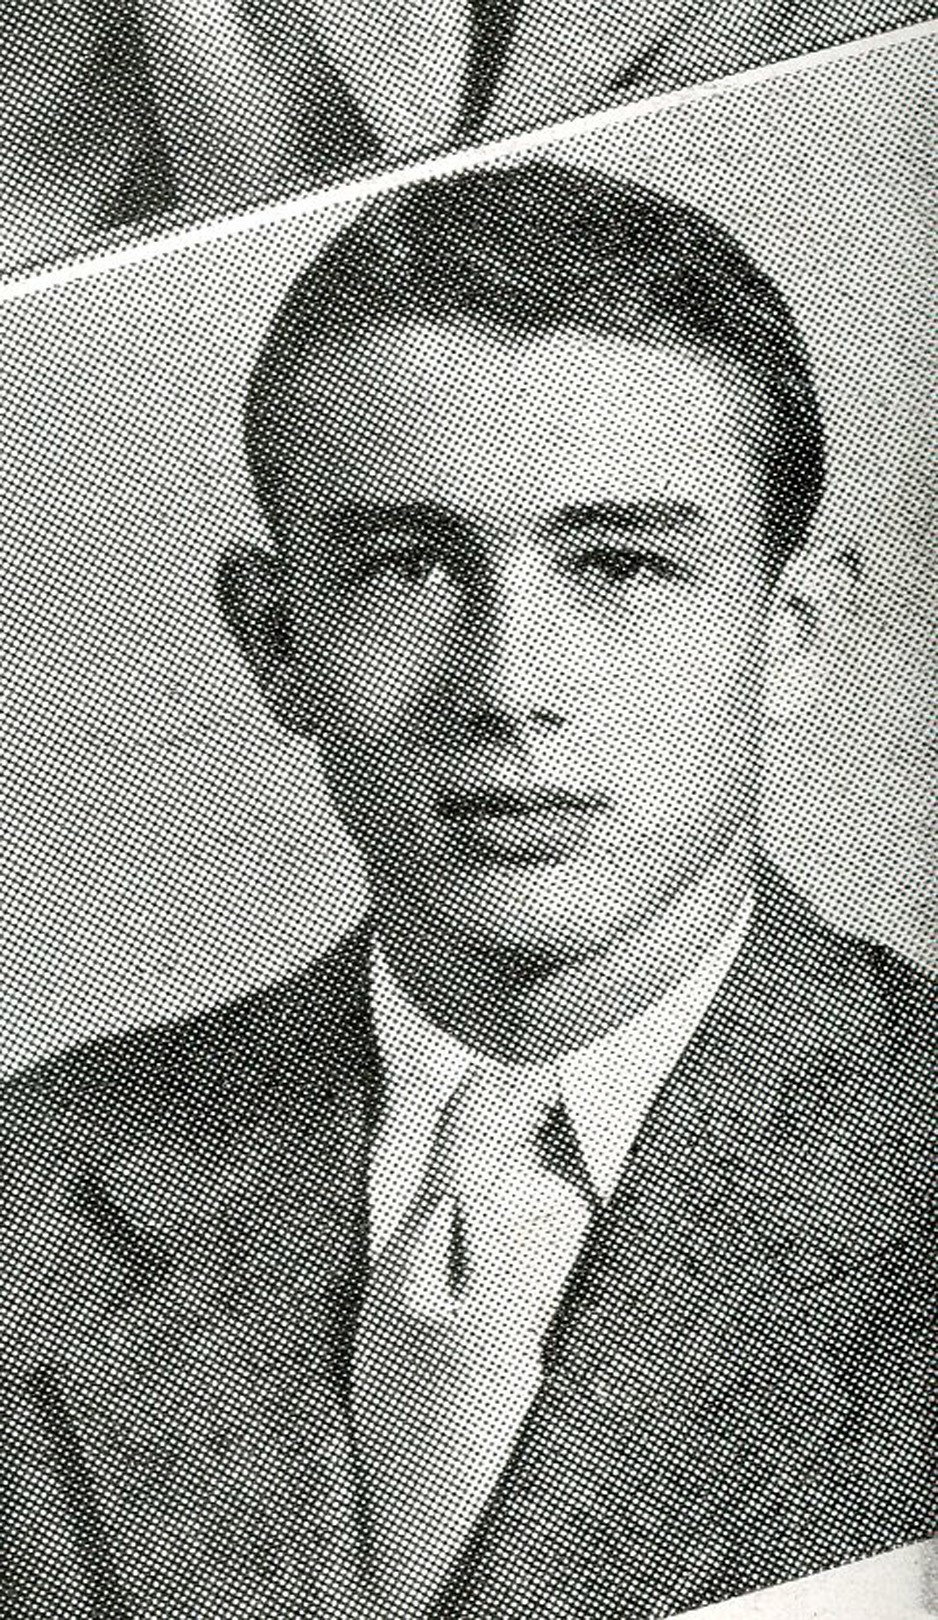 - 1949 James Dean High School Yearbook (ex-Seth Poppel Yearbook Library)